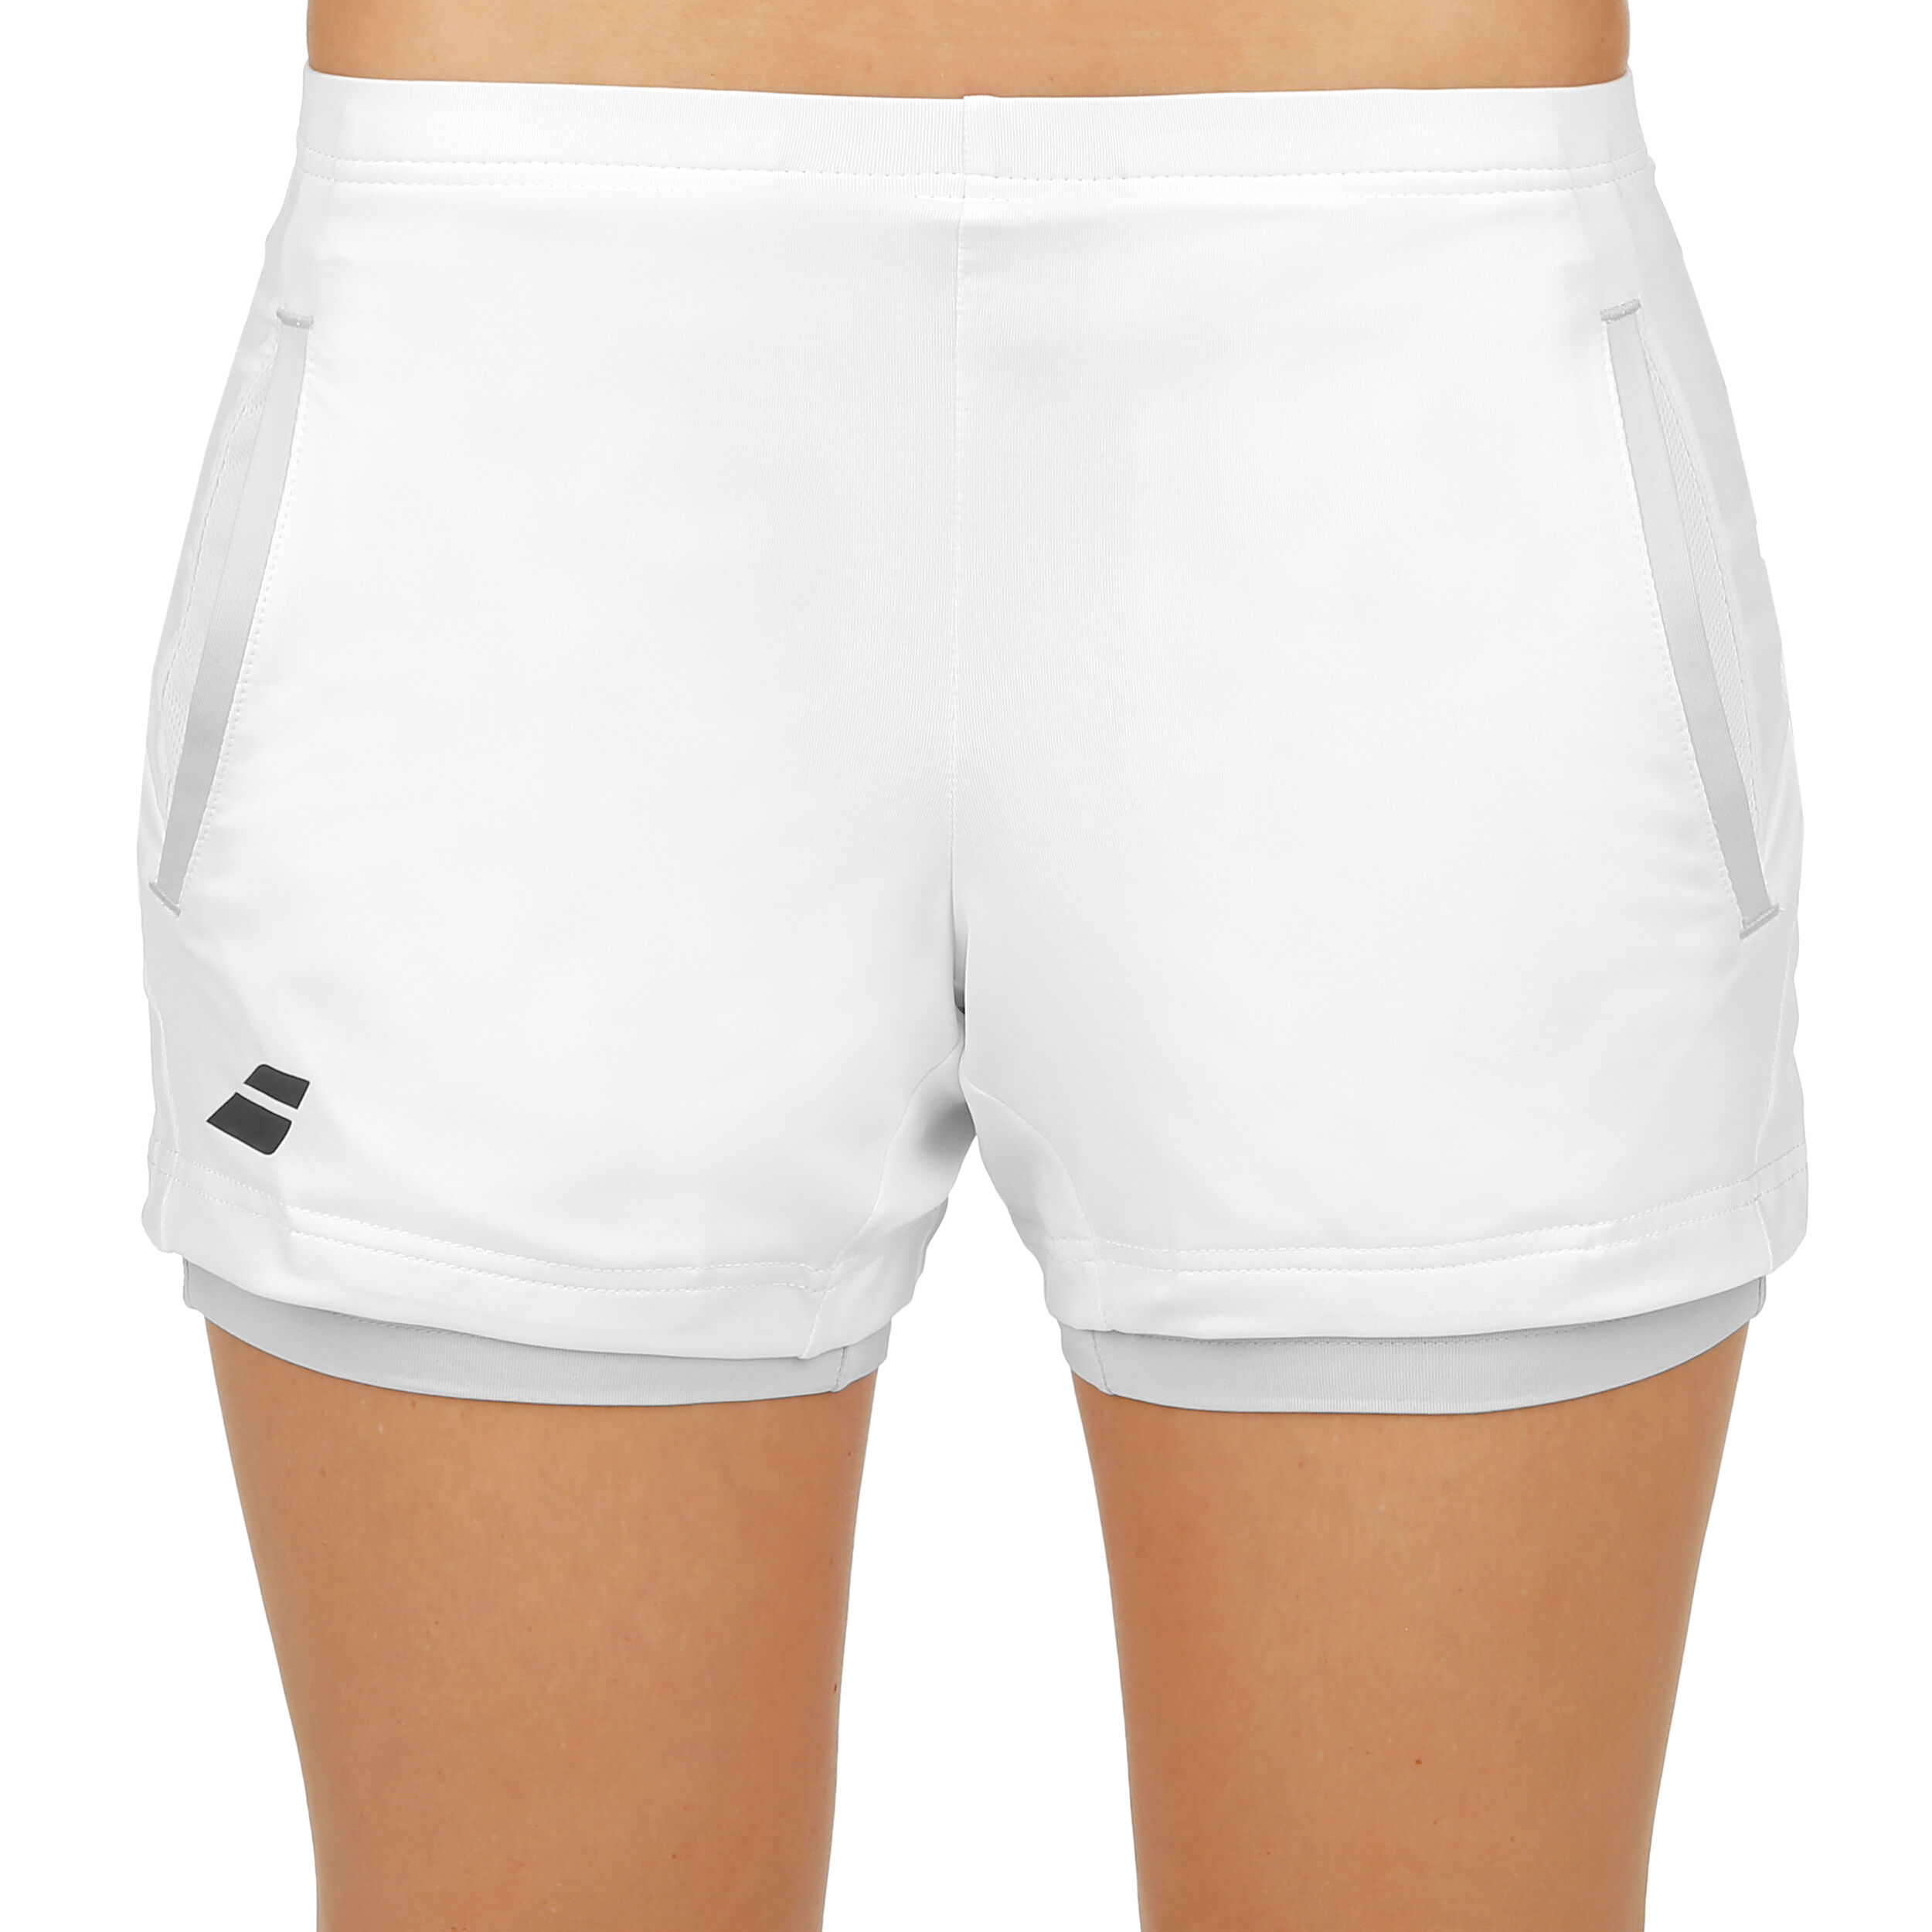 Babolat Tennis Shorts Size XS 